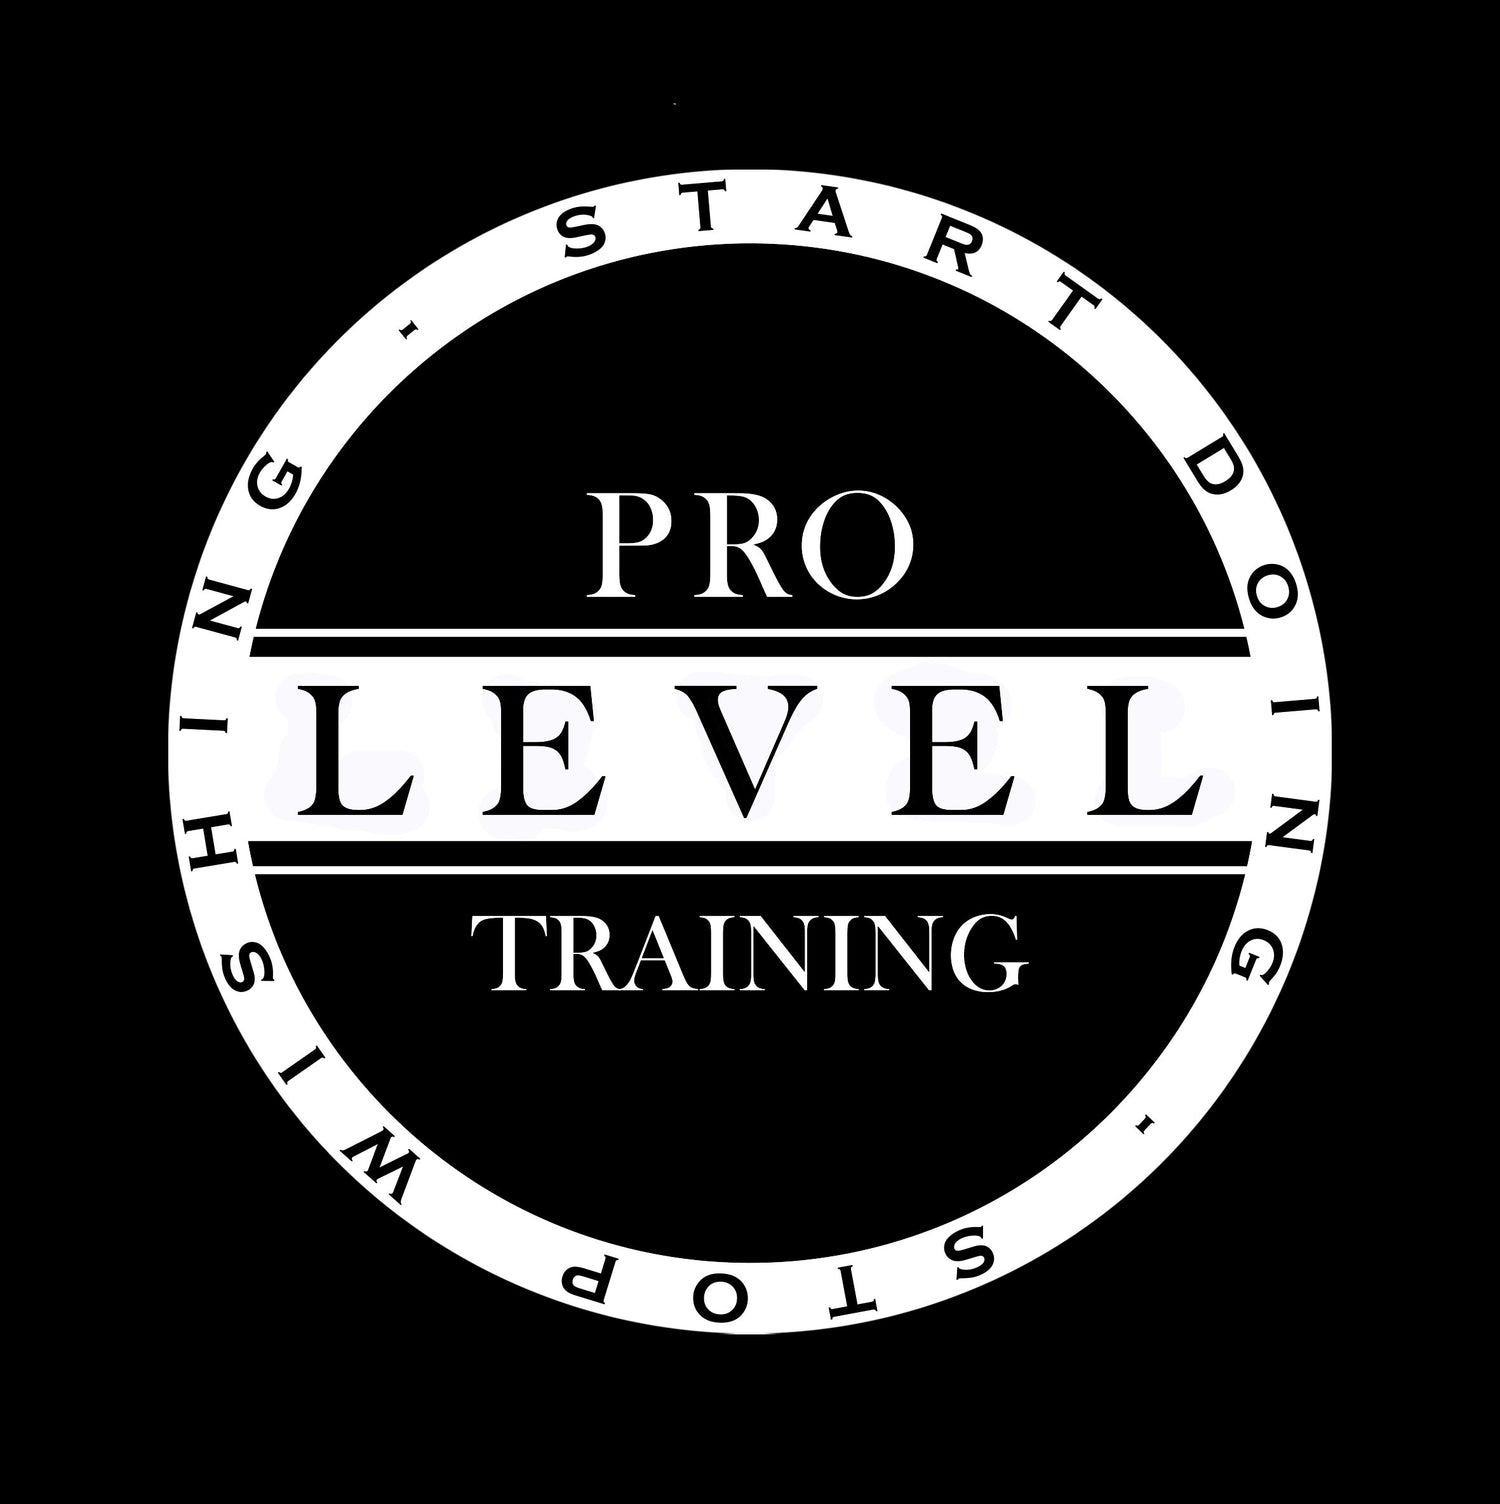 Pro Level Team & Training